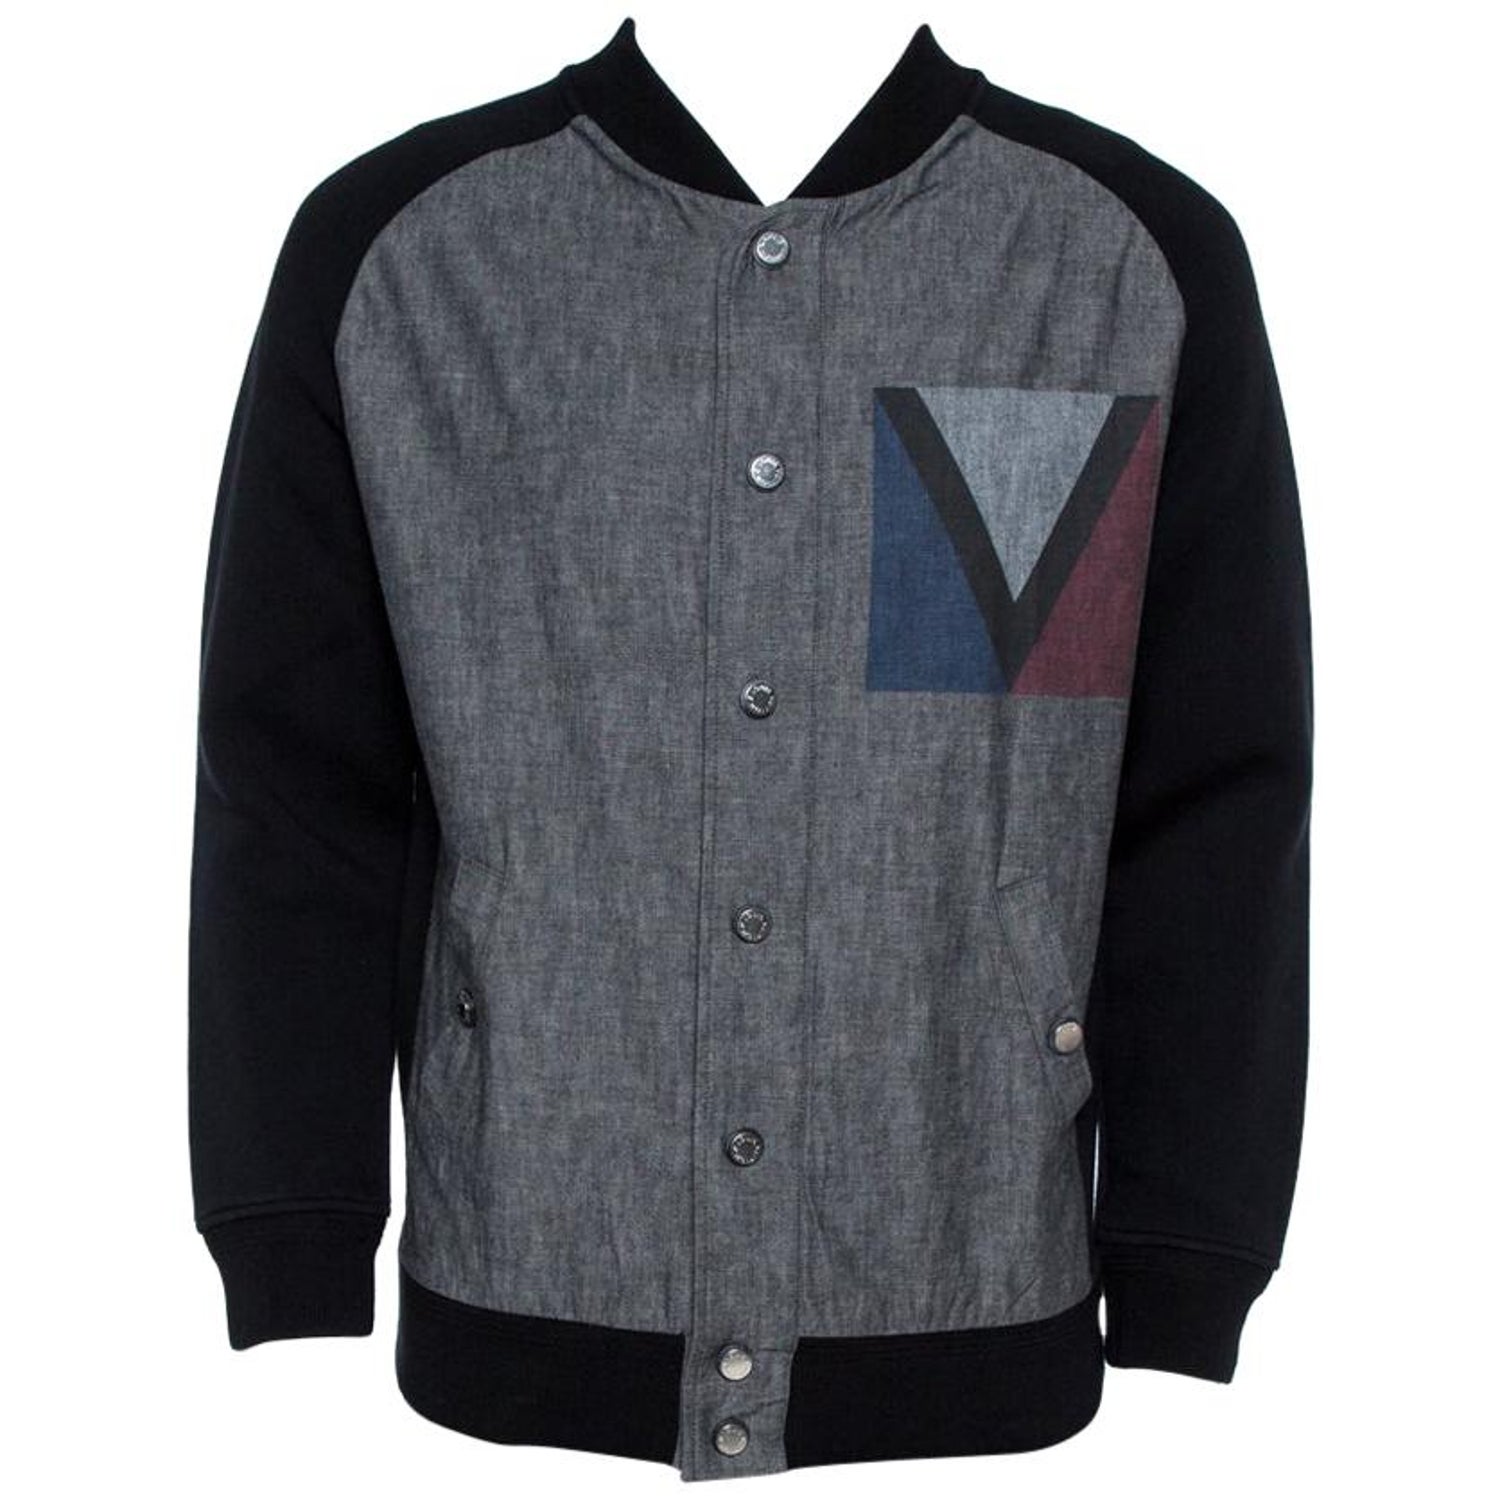 Black Louis Vuitton Varsity Jacket - For Sale on 1stDibs